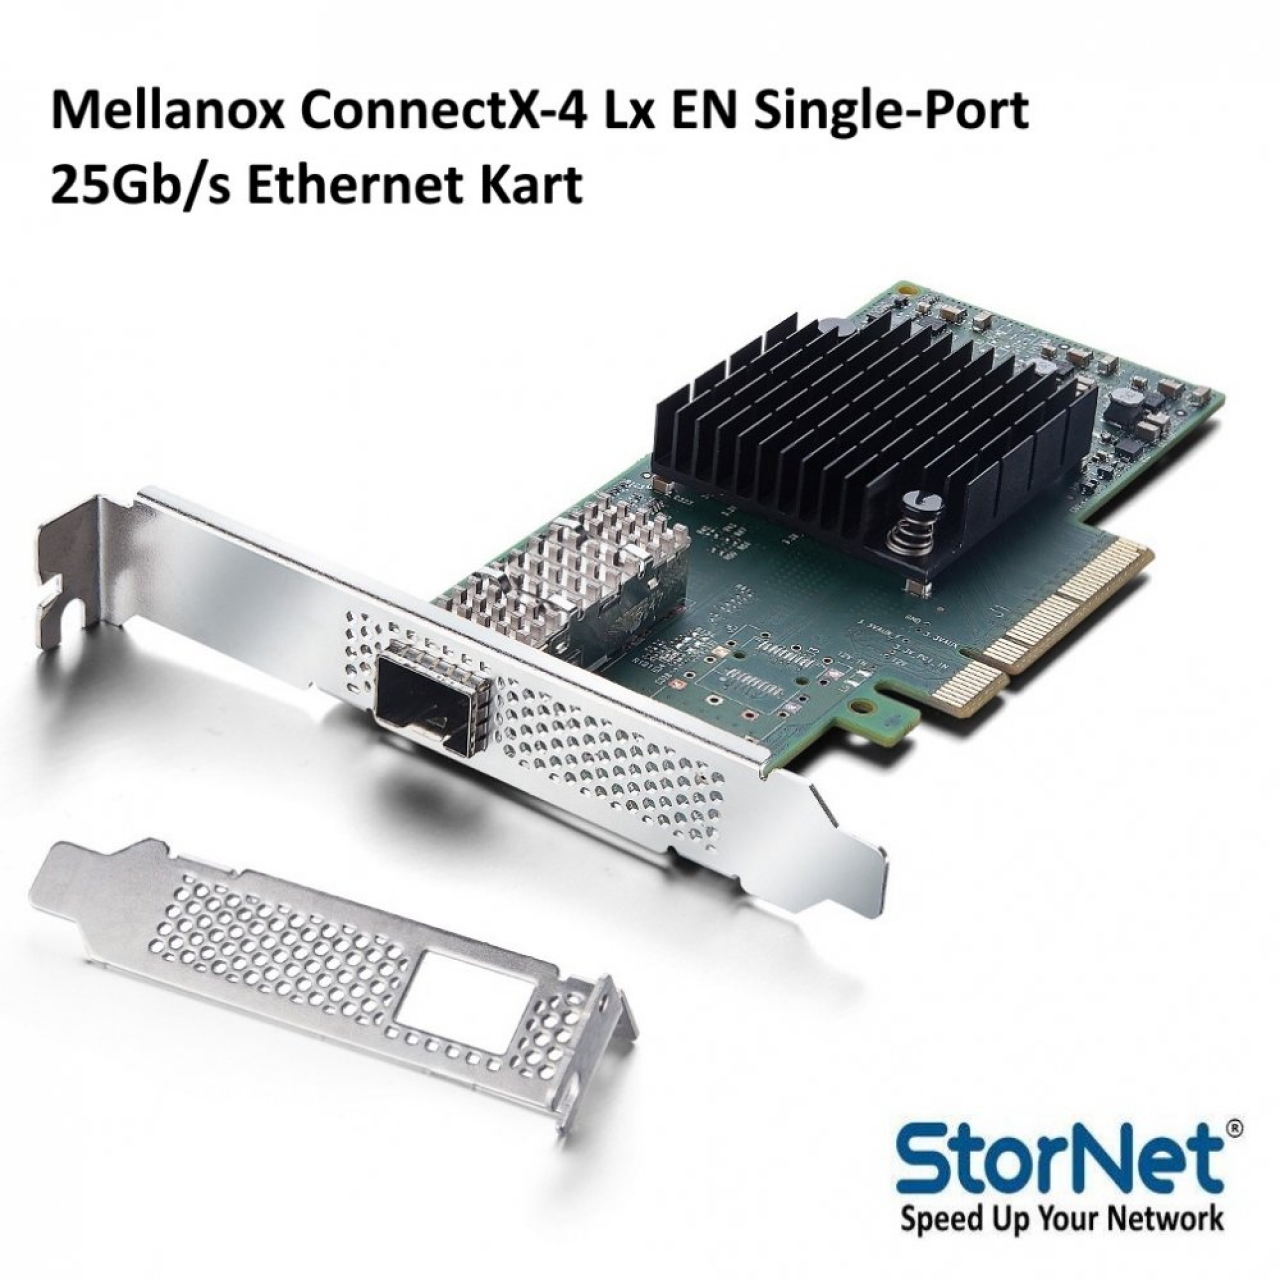 Mellanox ConnectX-4 Lx EN Single-Port 25Gb/s Ethernet Kart